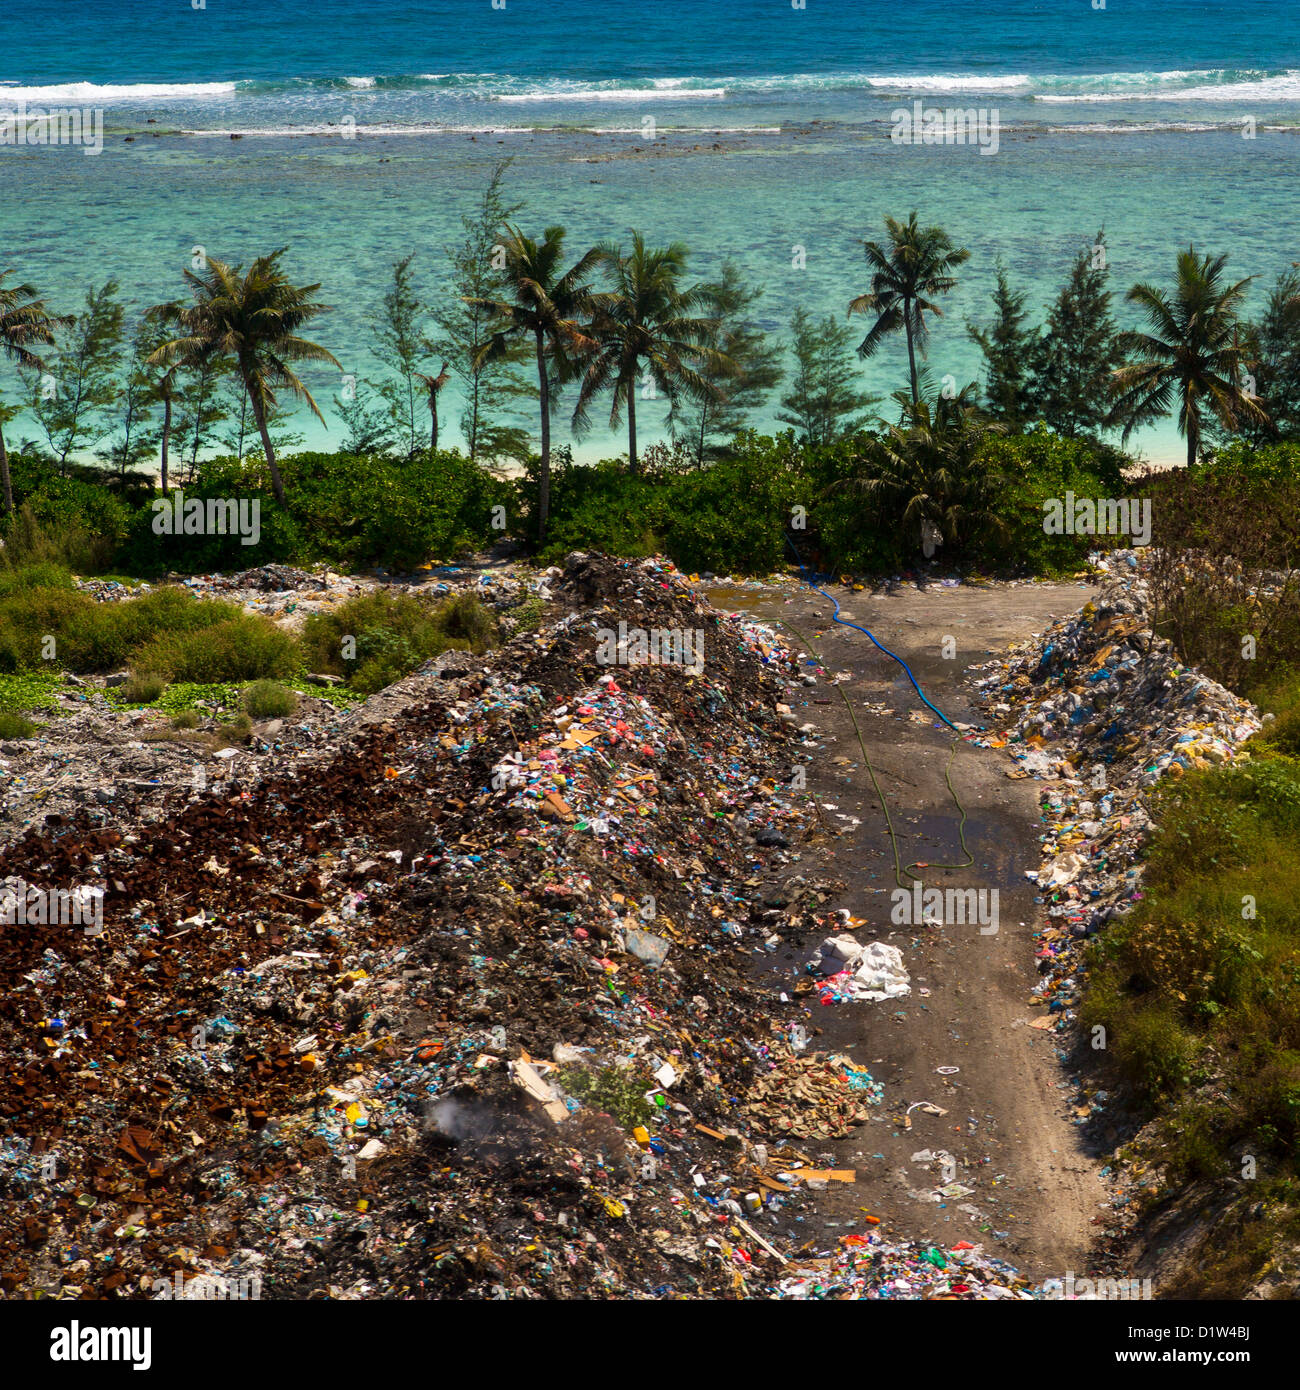 Dump Site In Front Of The Sea, Male, Maldives Stock Photo